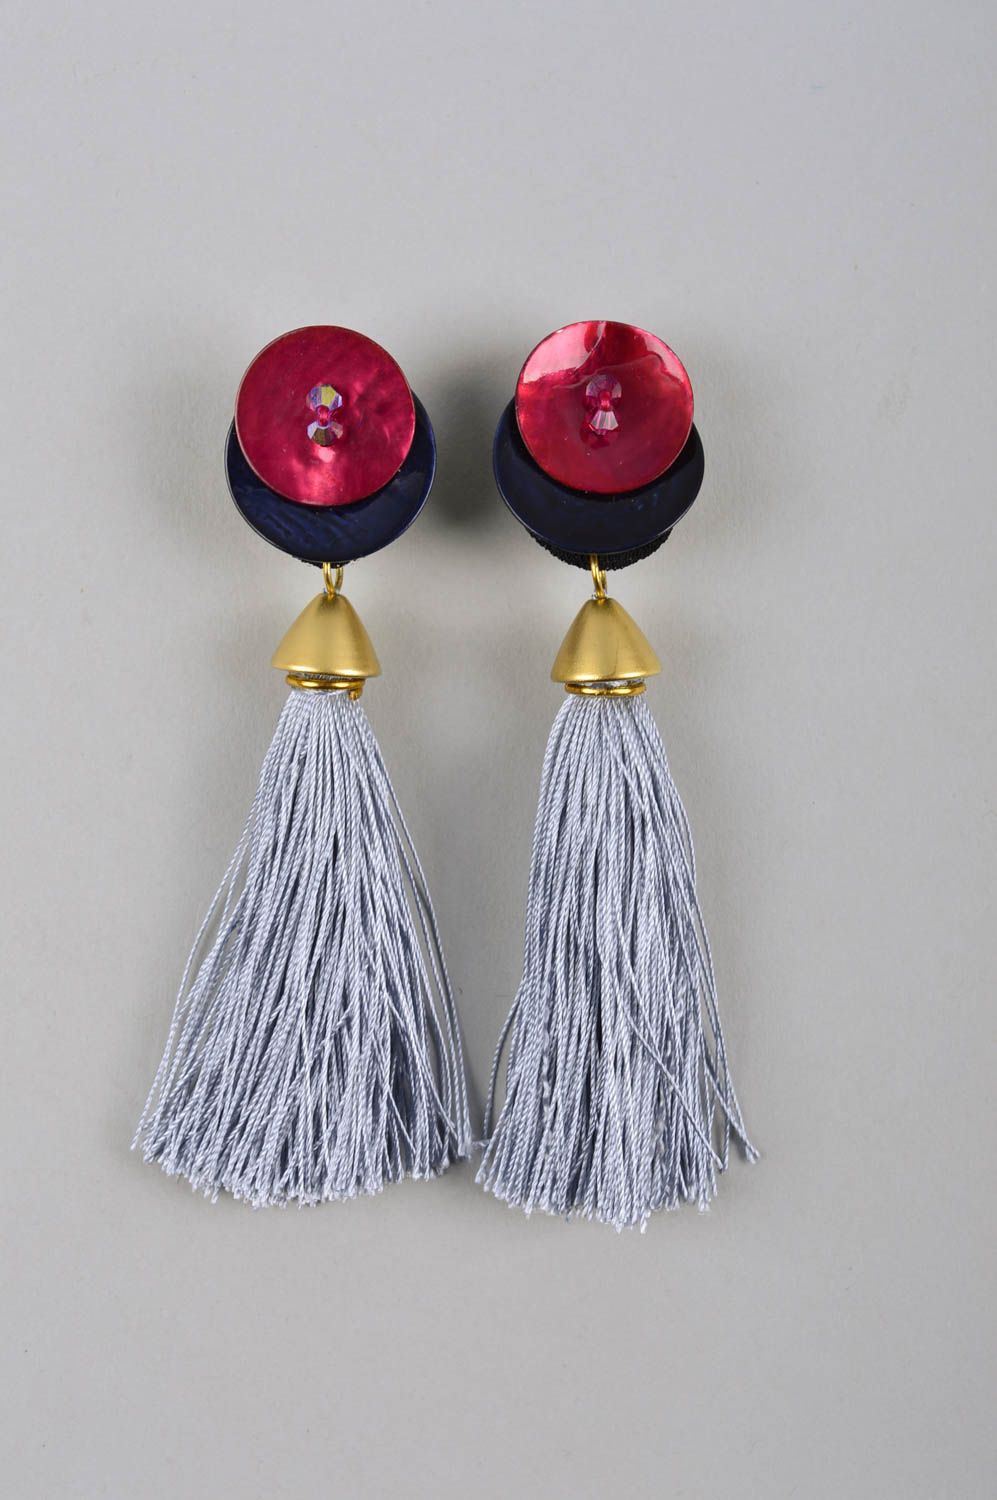 Handmade earrings unusual earrings designer accessory gift ideas fashion jewelry photo 3